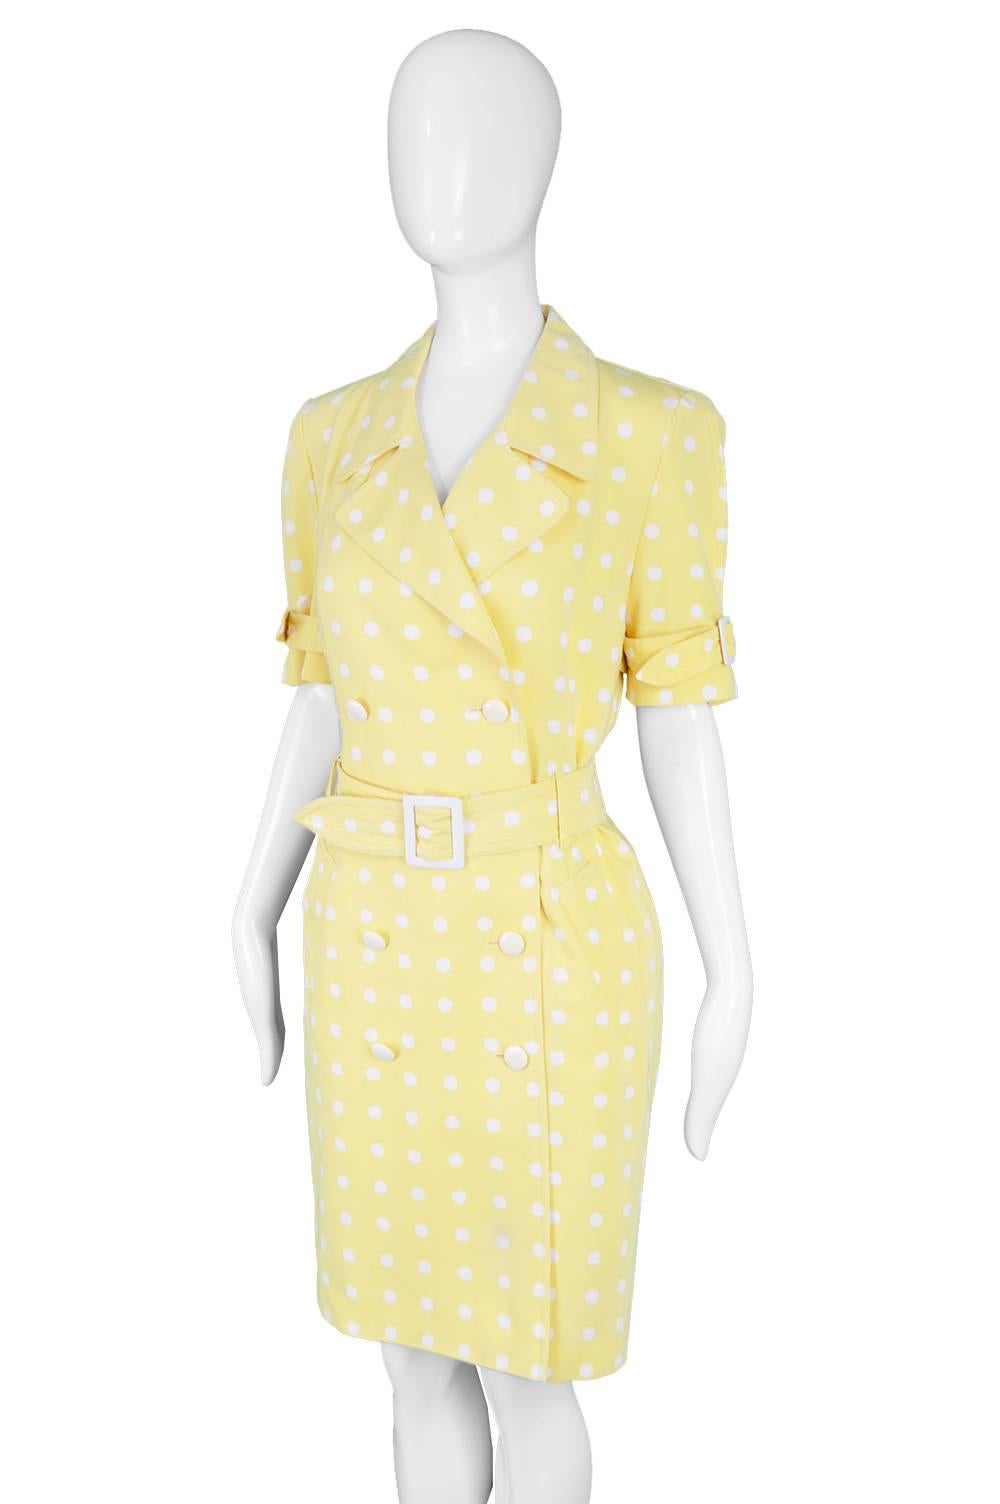 Women's Escada Vintage Yellow & White Polka Dot Short Sleeve Trench Coat Dress, 1980s